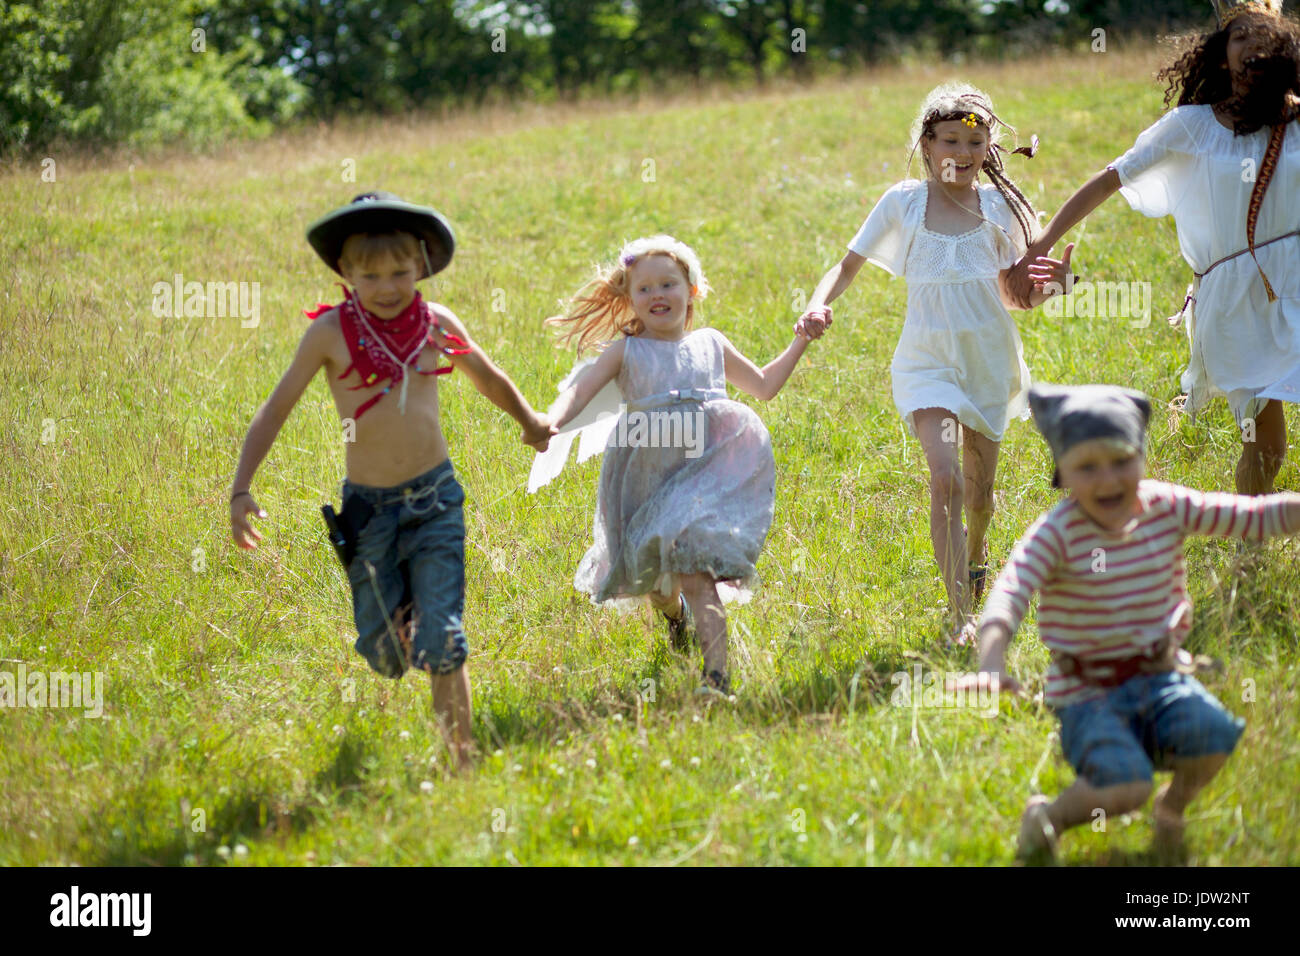 Children in costumes running in field Stock Photo